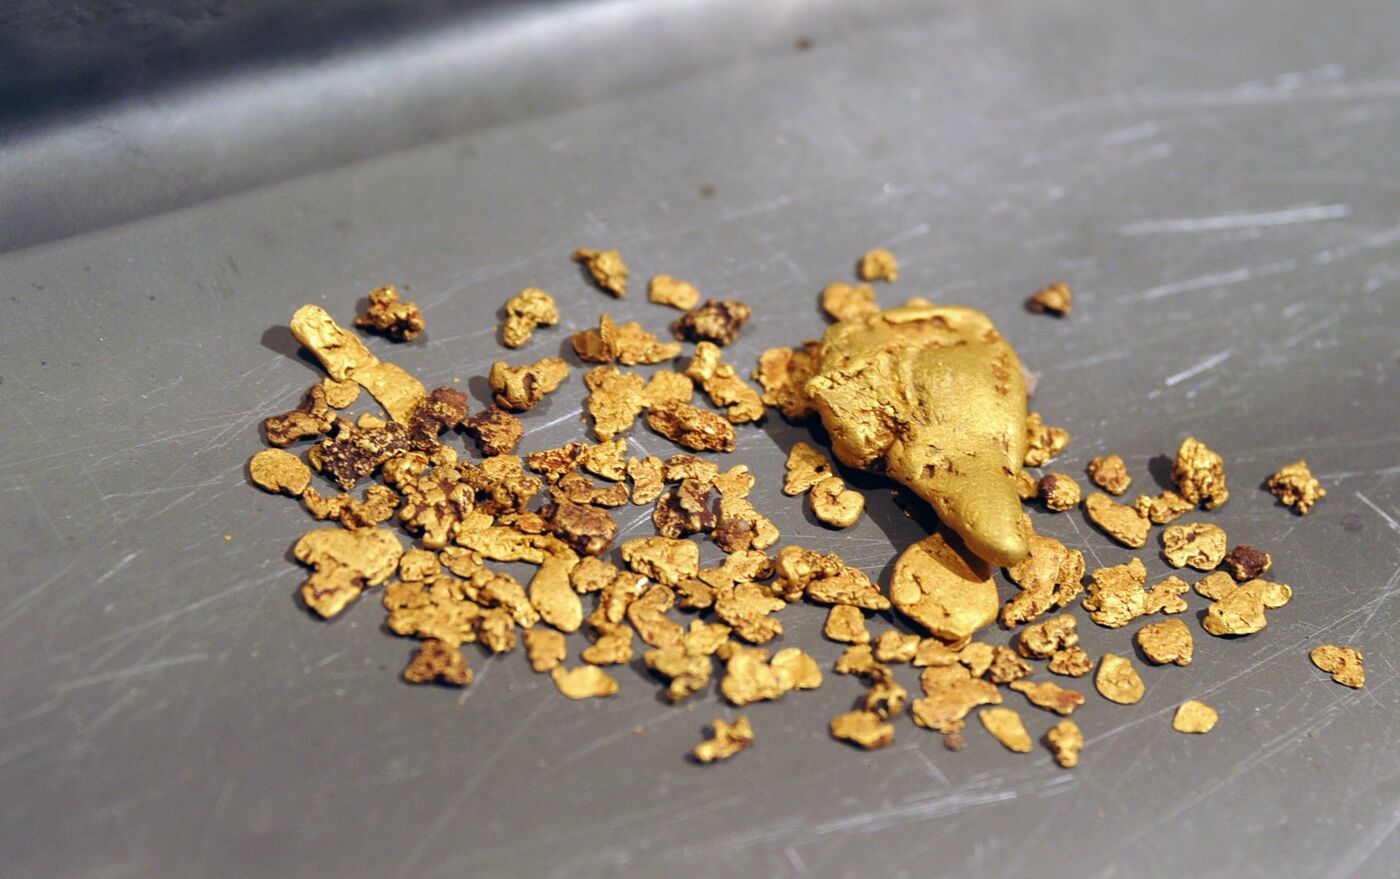 Охранник ЧОП похитил золото на 9,5 млн рублей в Якутии